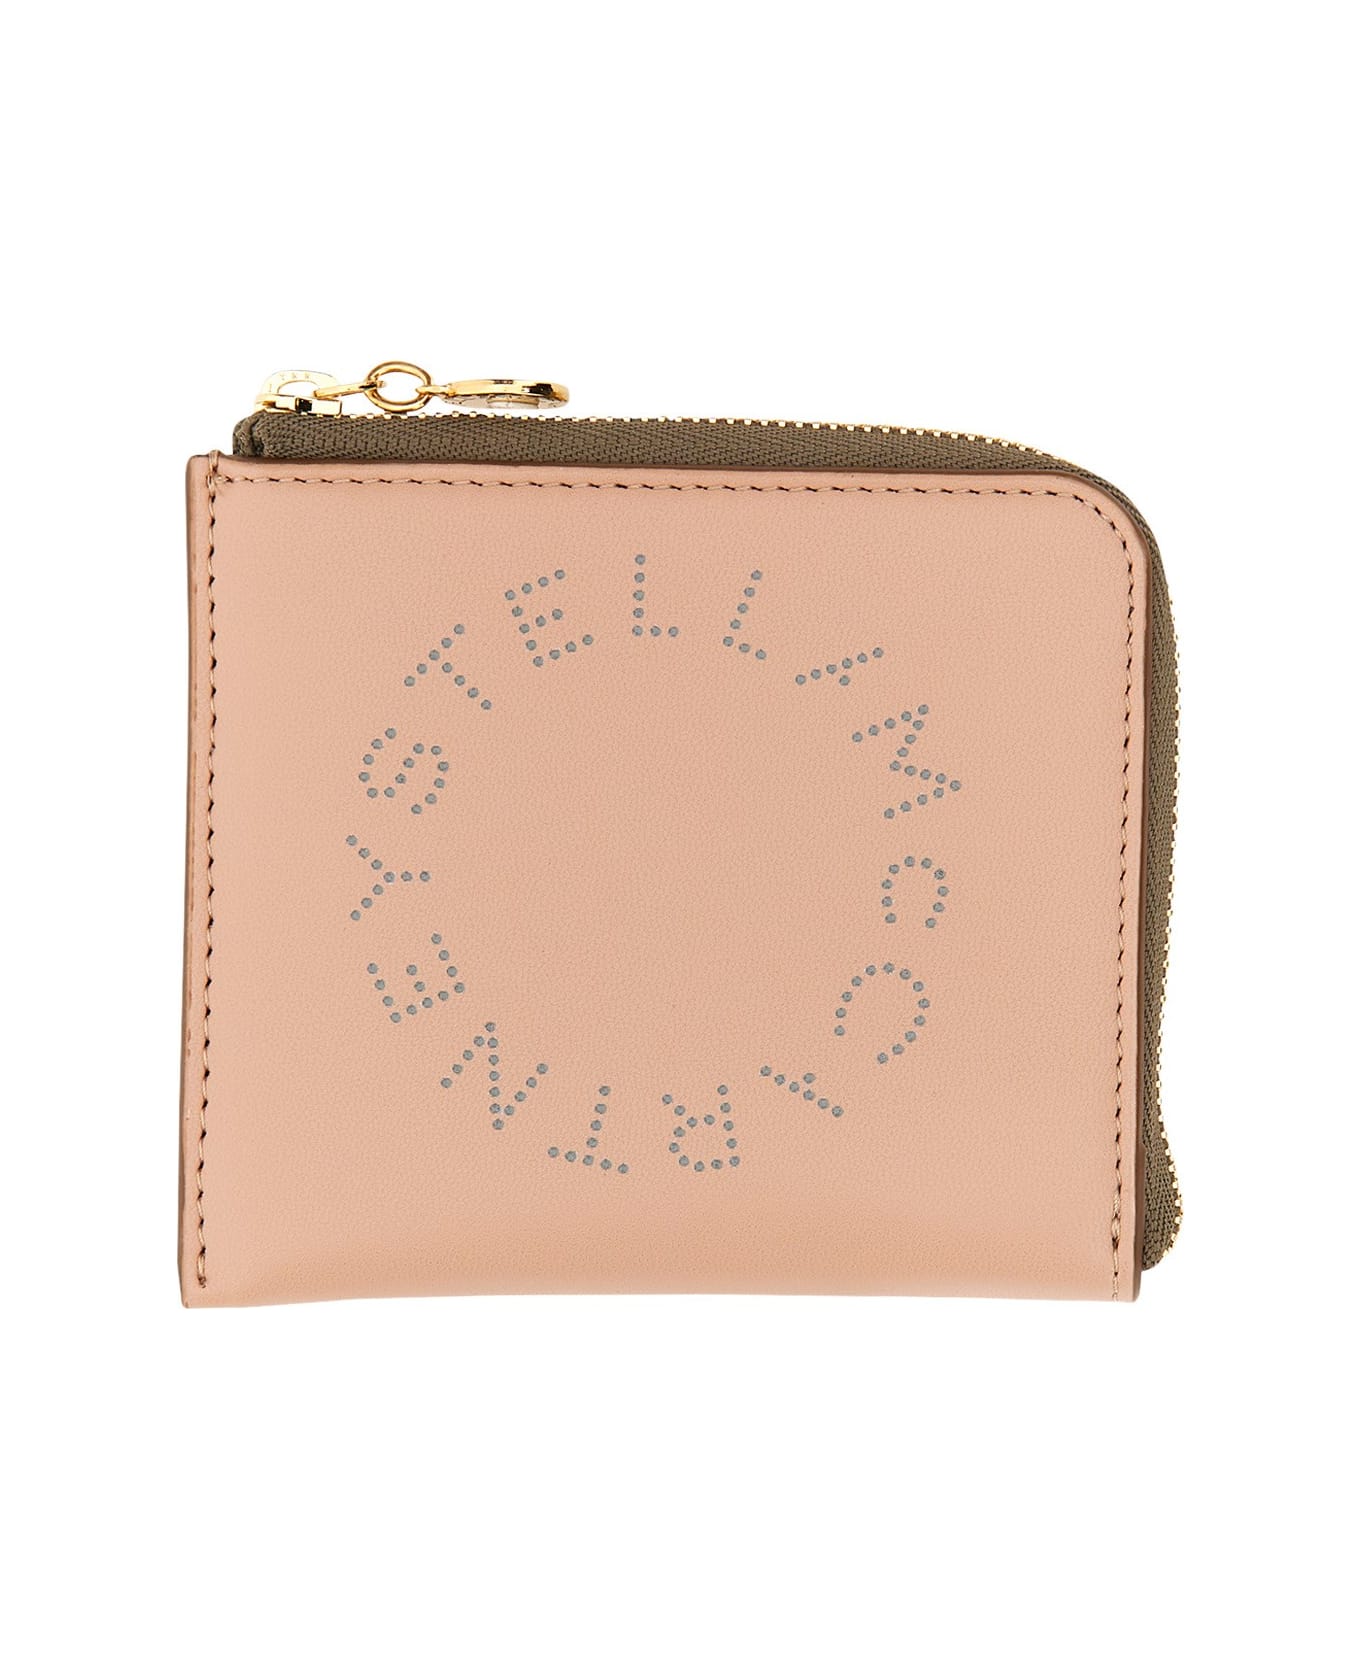 Stella McCartney Zipped Wallet - Pink